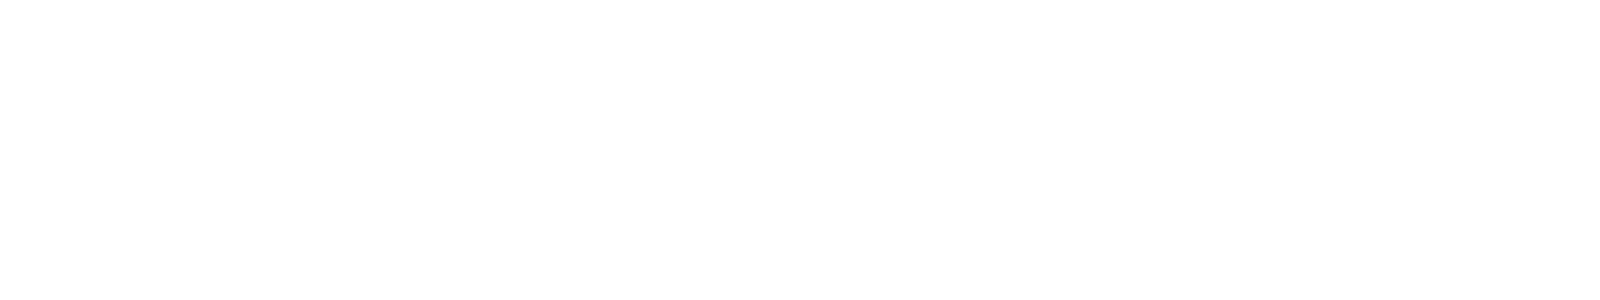 s7law logo biale2 - Podkarpackie